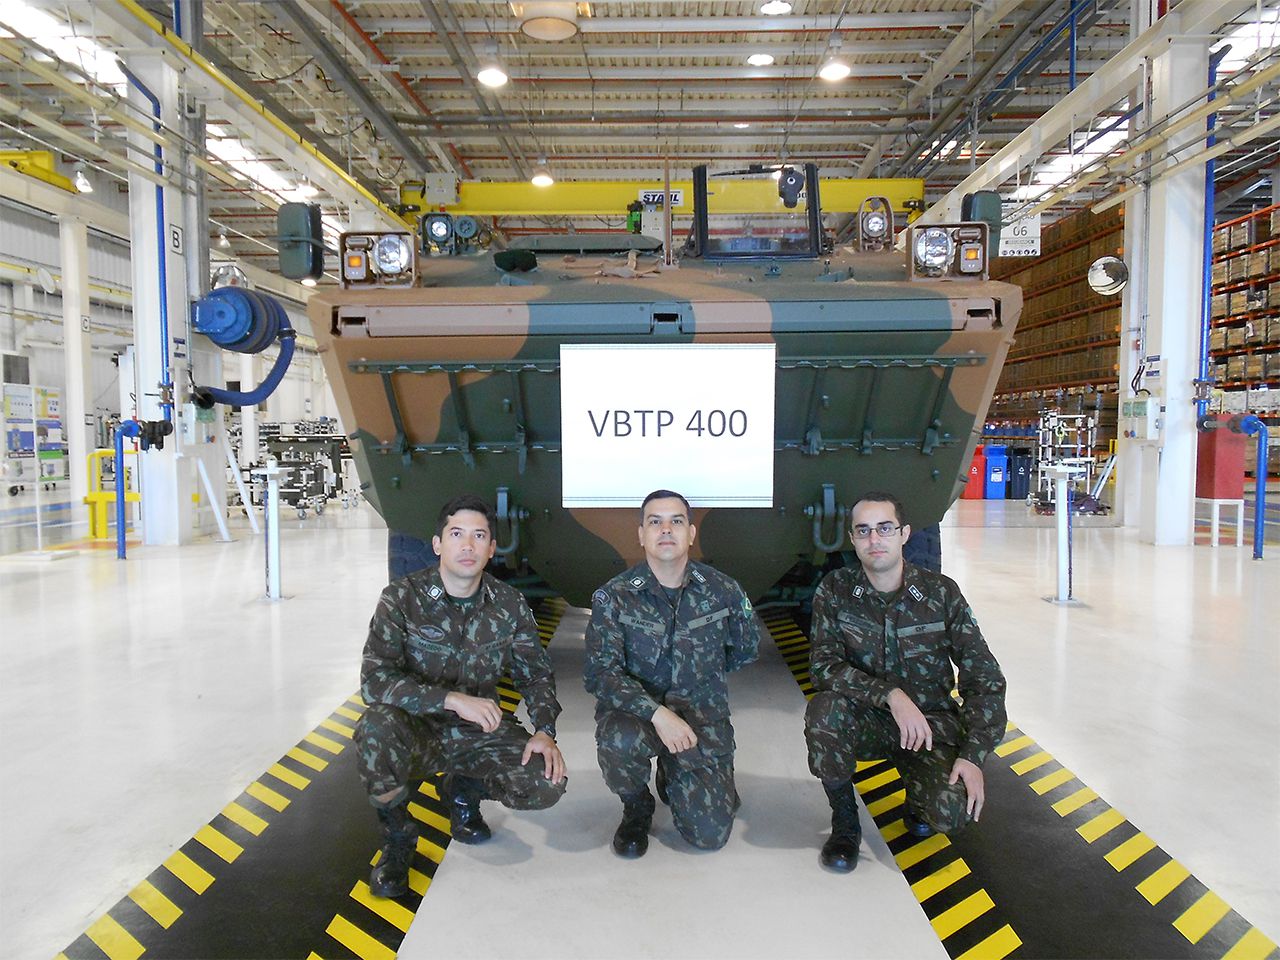 Iveco entrega o Guarani nº 400 ao Exército Brasileiro - Forças